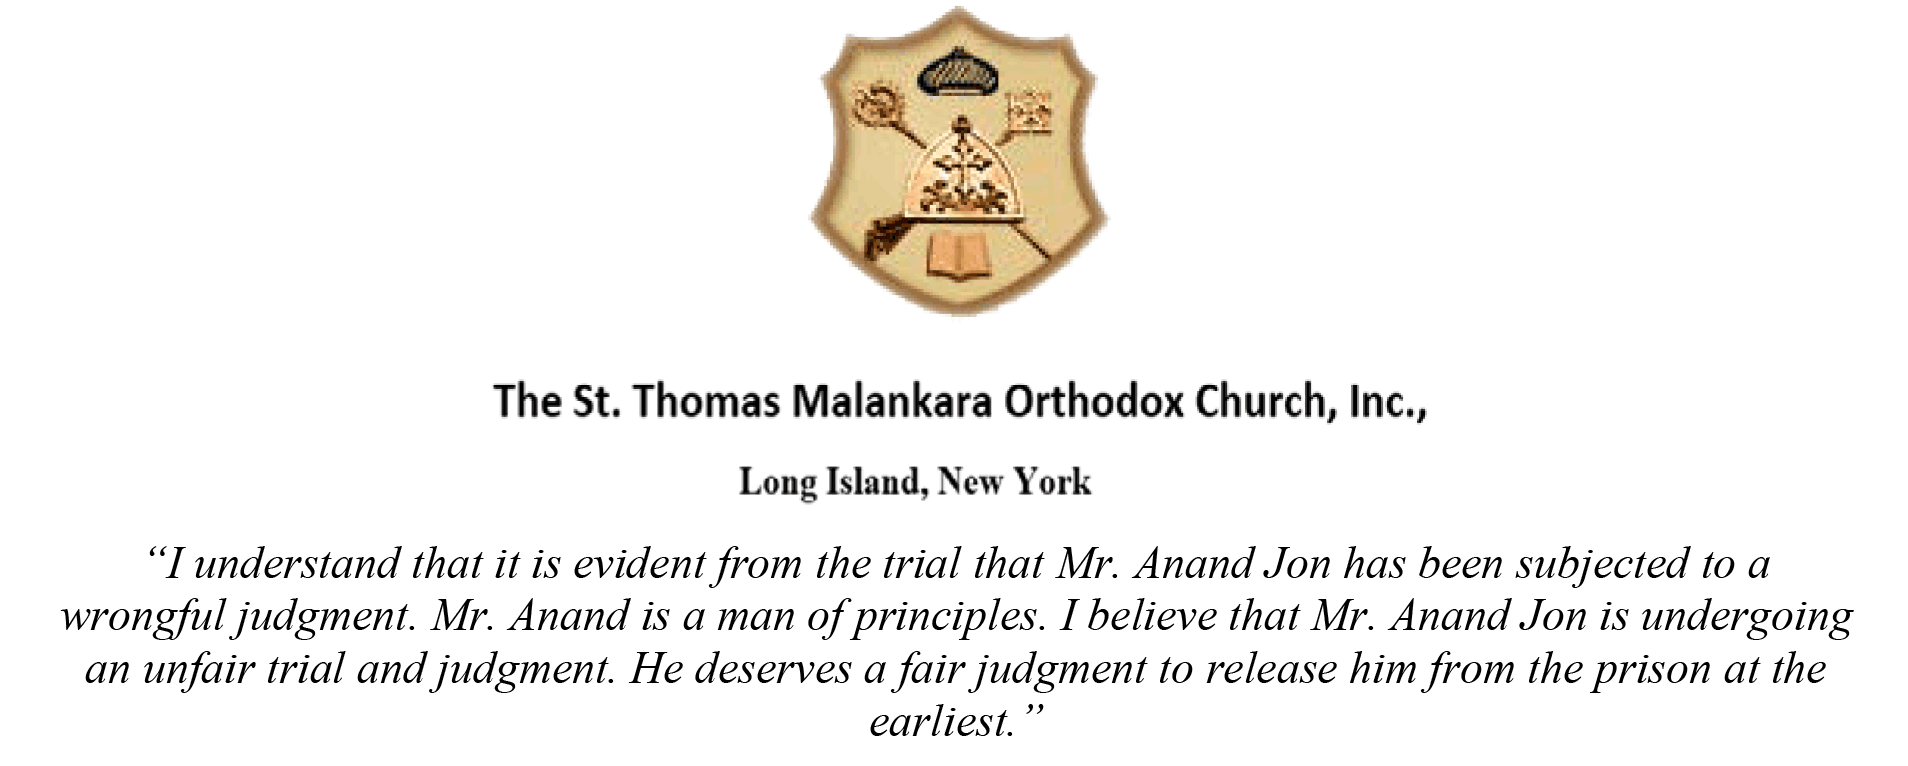 The St. Thomas Malankara Orthodox Church, Inc.